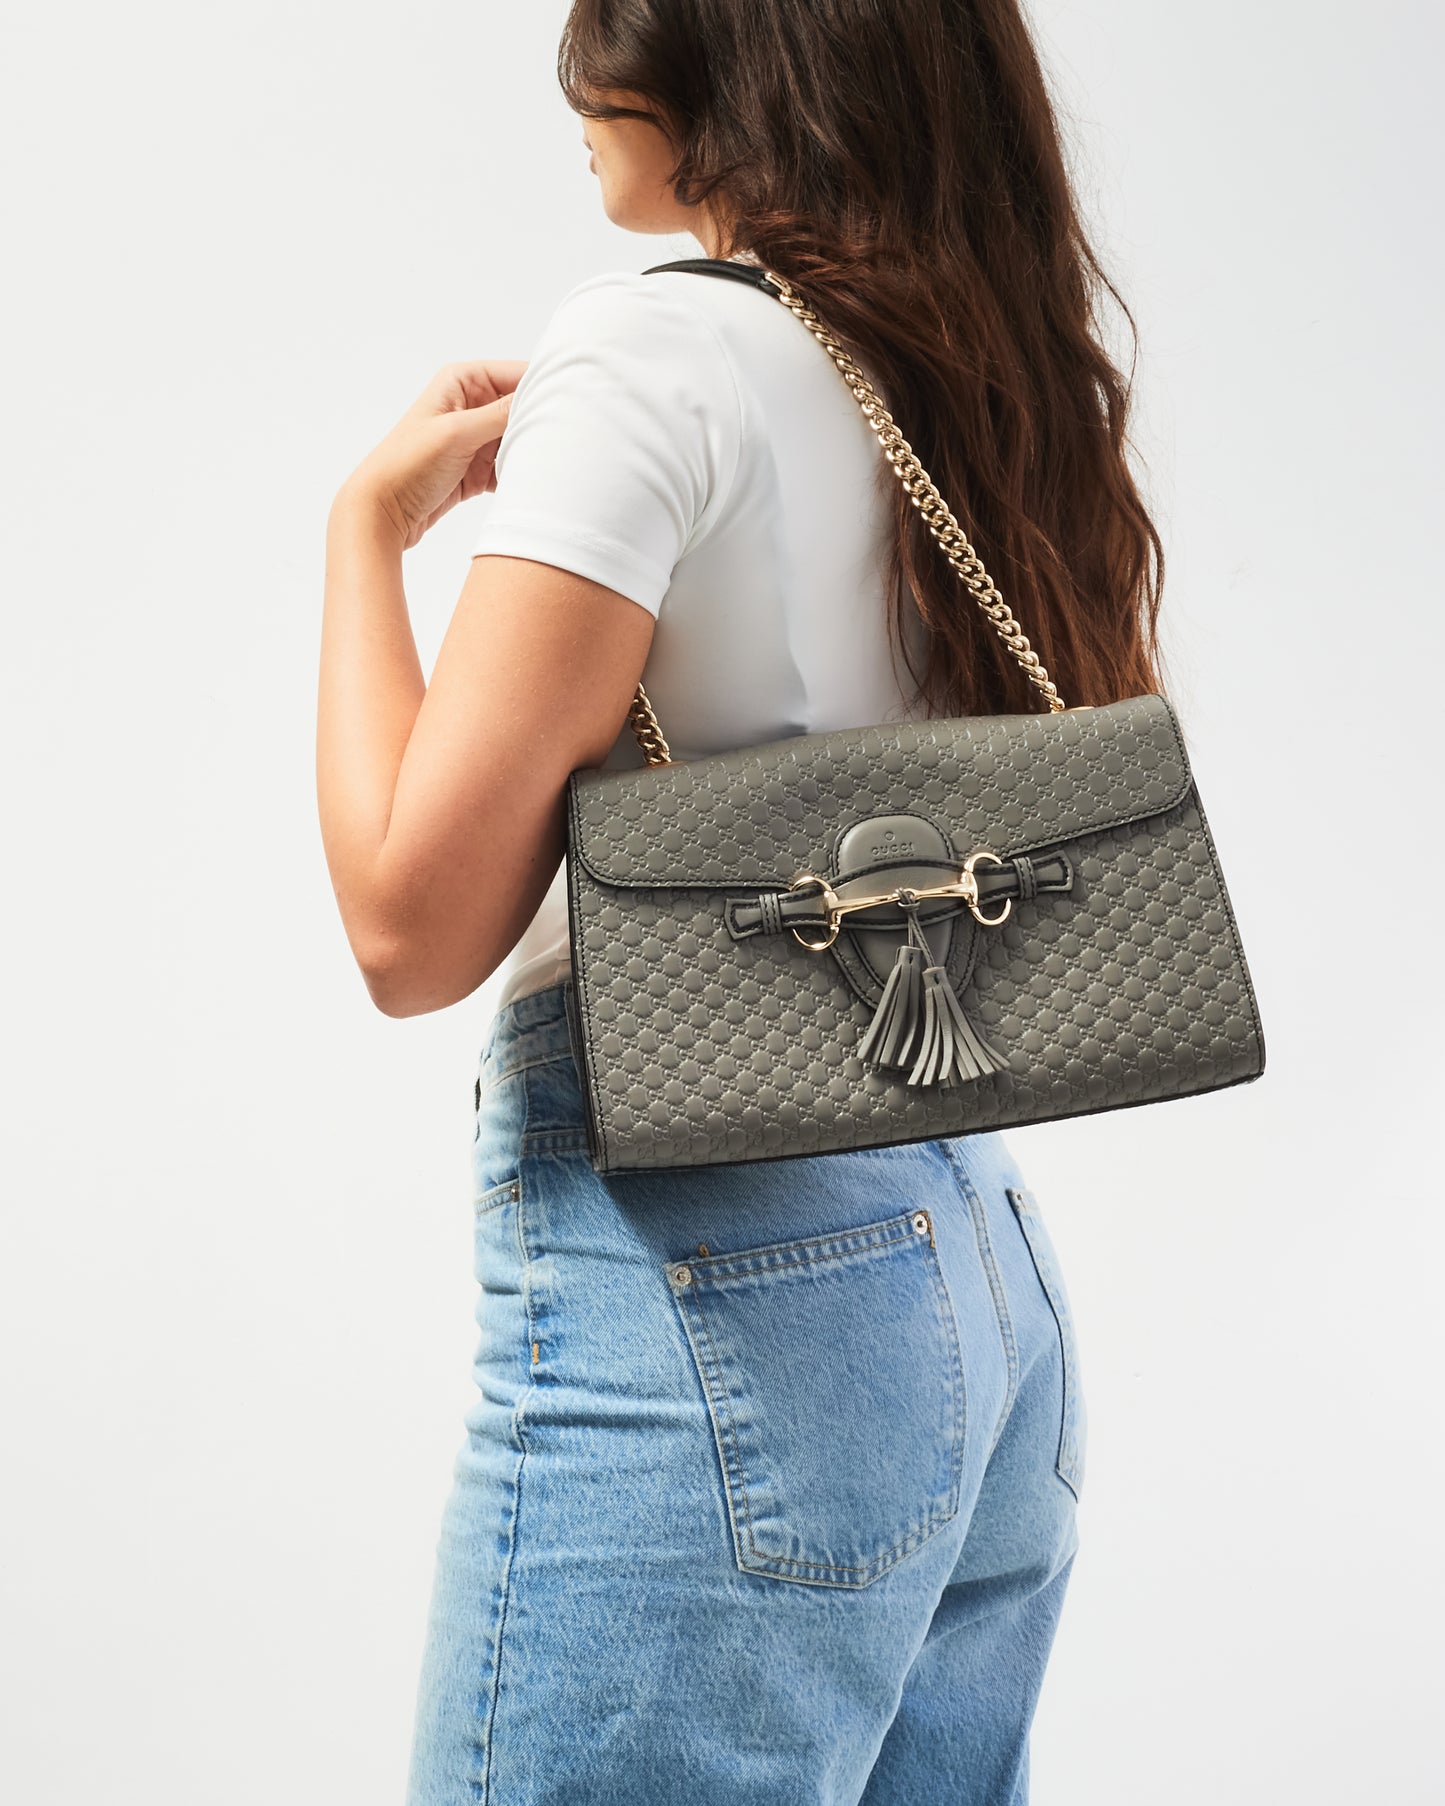 Gucci Grey Leather Guccissima Emily Shoulder Bag